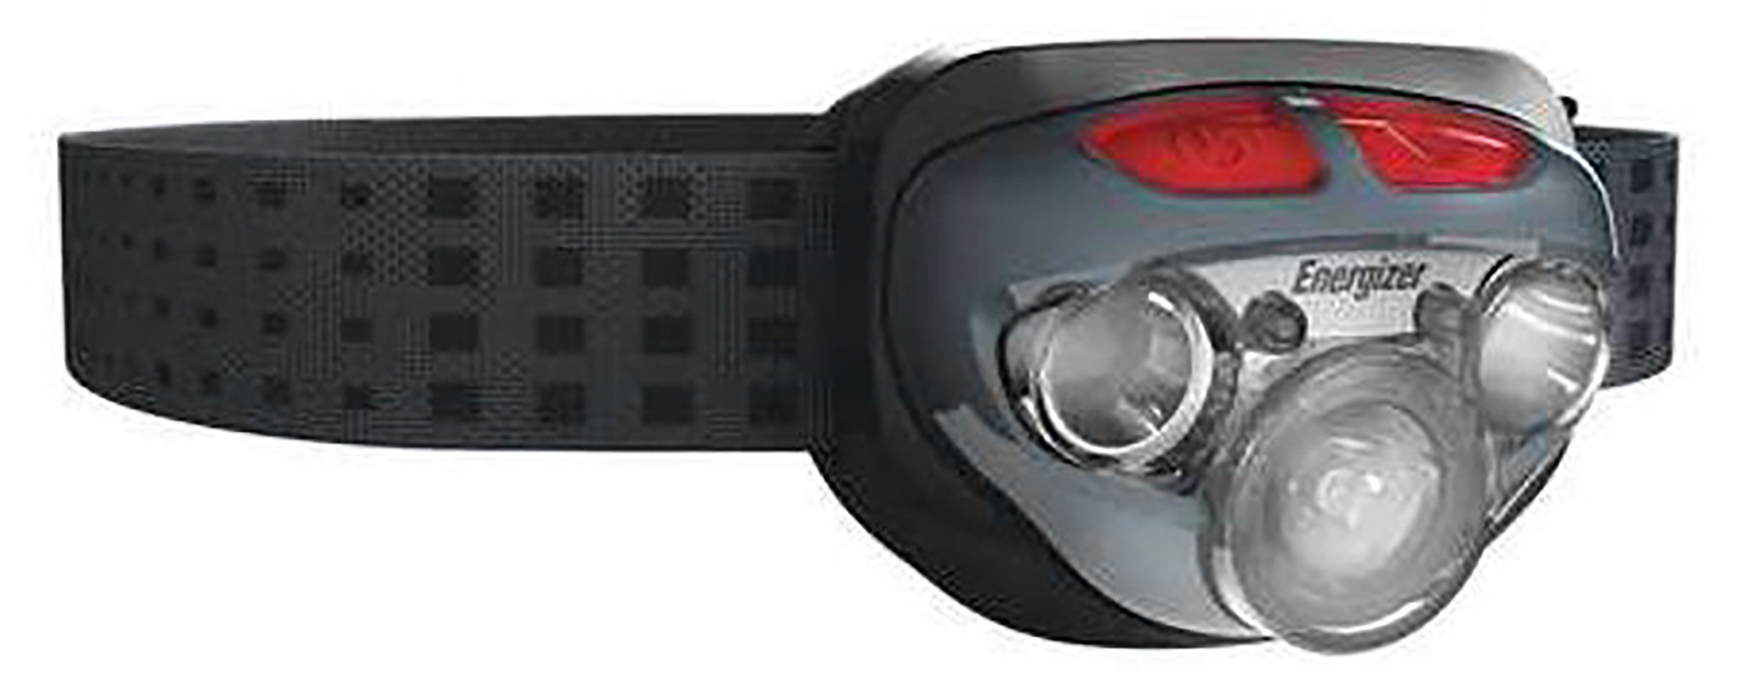 Rayovac Vision Hd+ Focus, Energizer Hddin32e    Vision Hd+focus Headlight